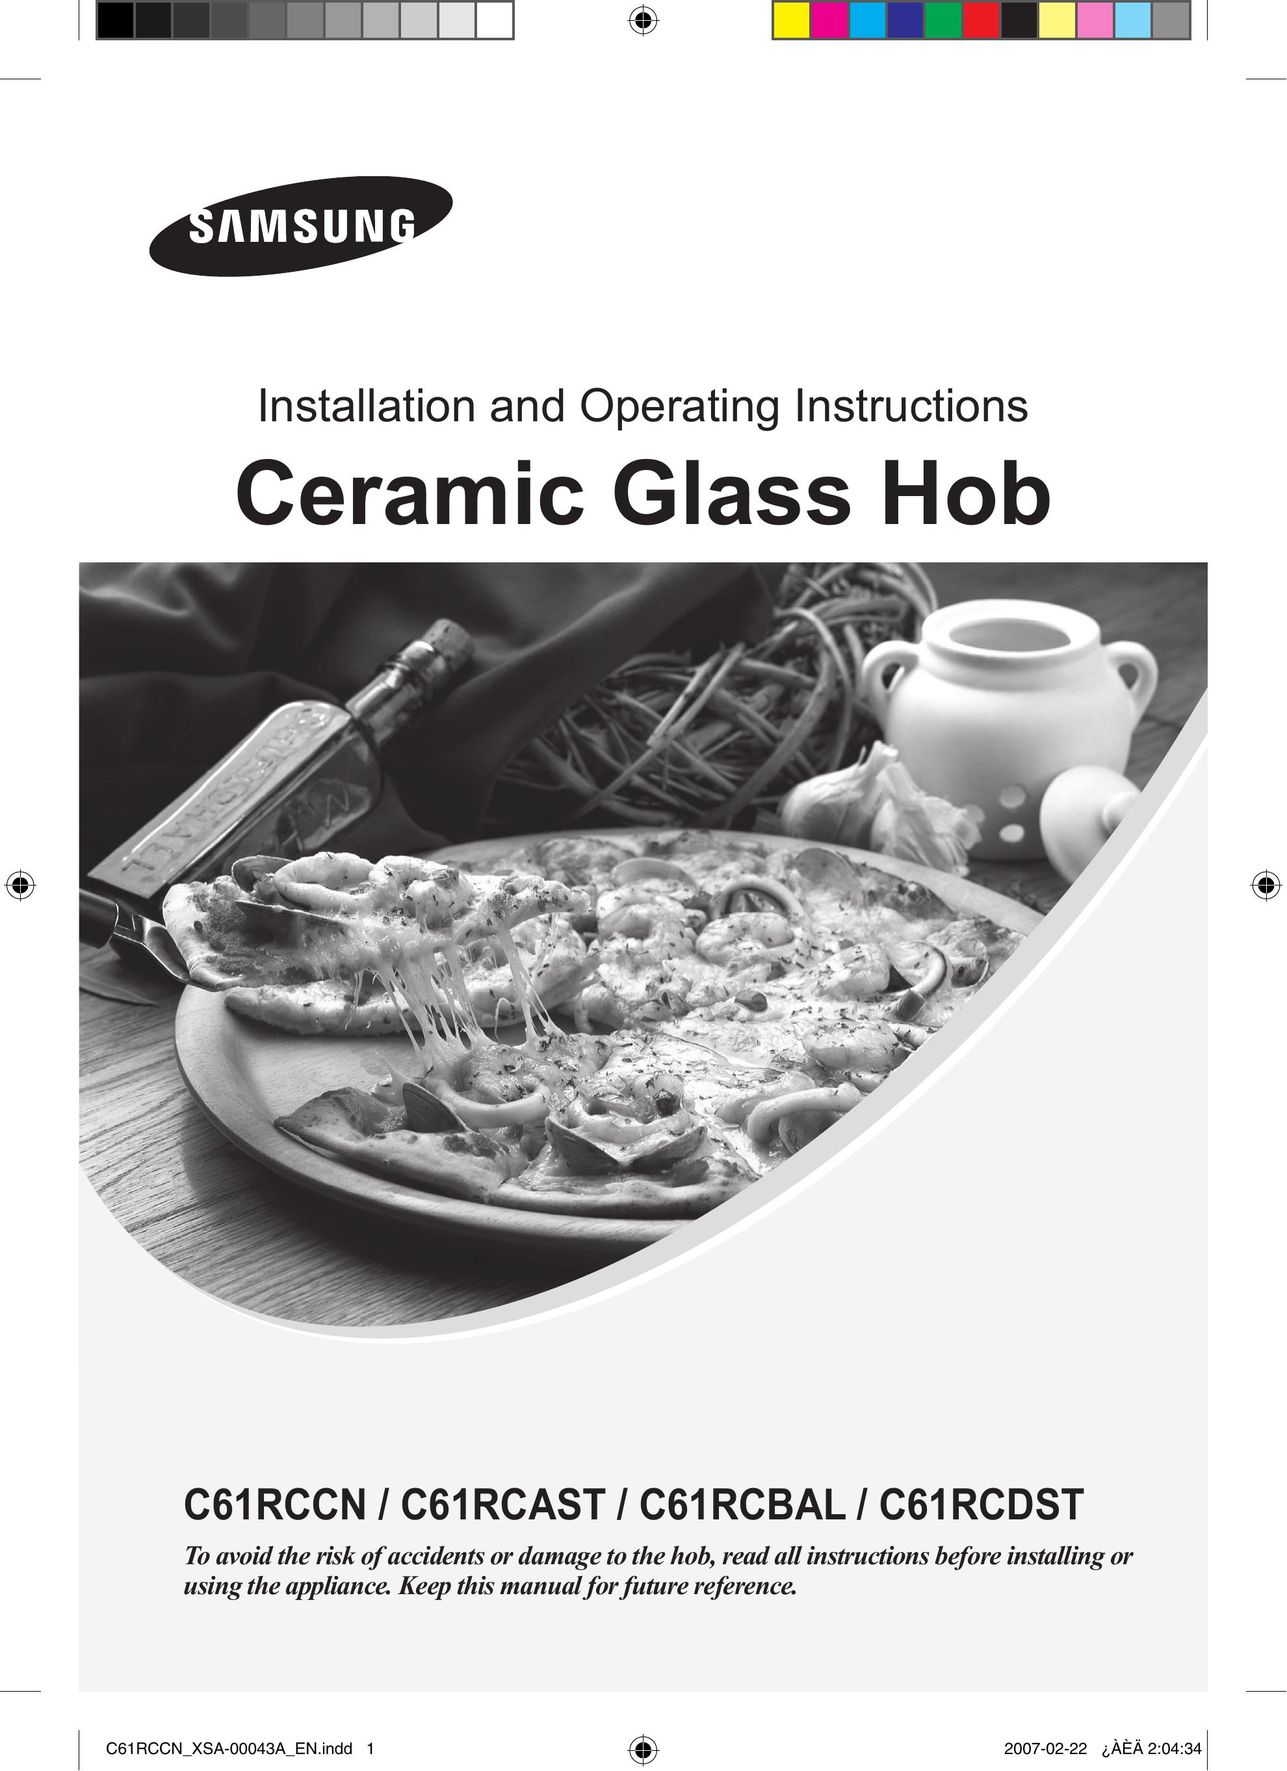 Samsung C61RCBAL Cooktop User Manual